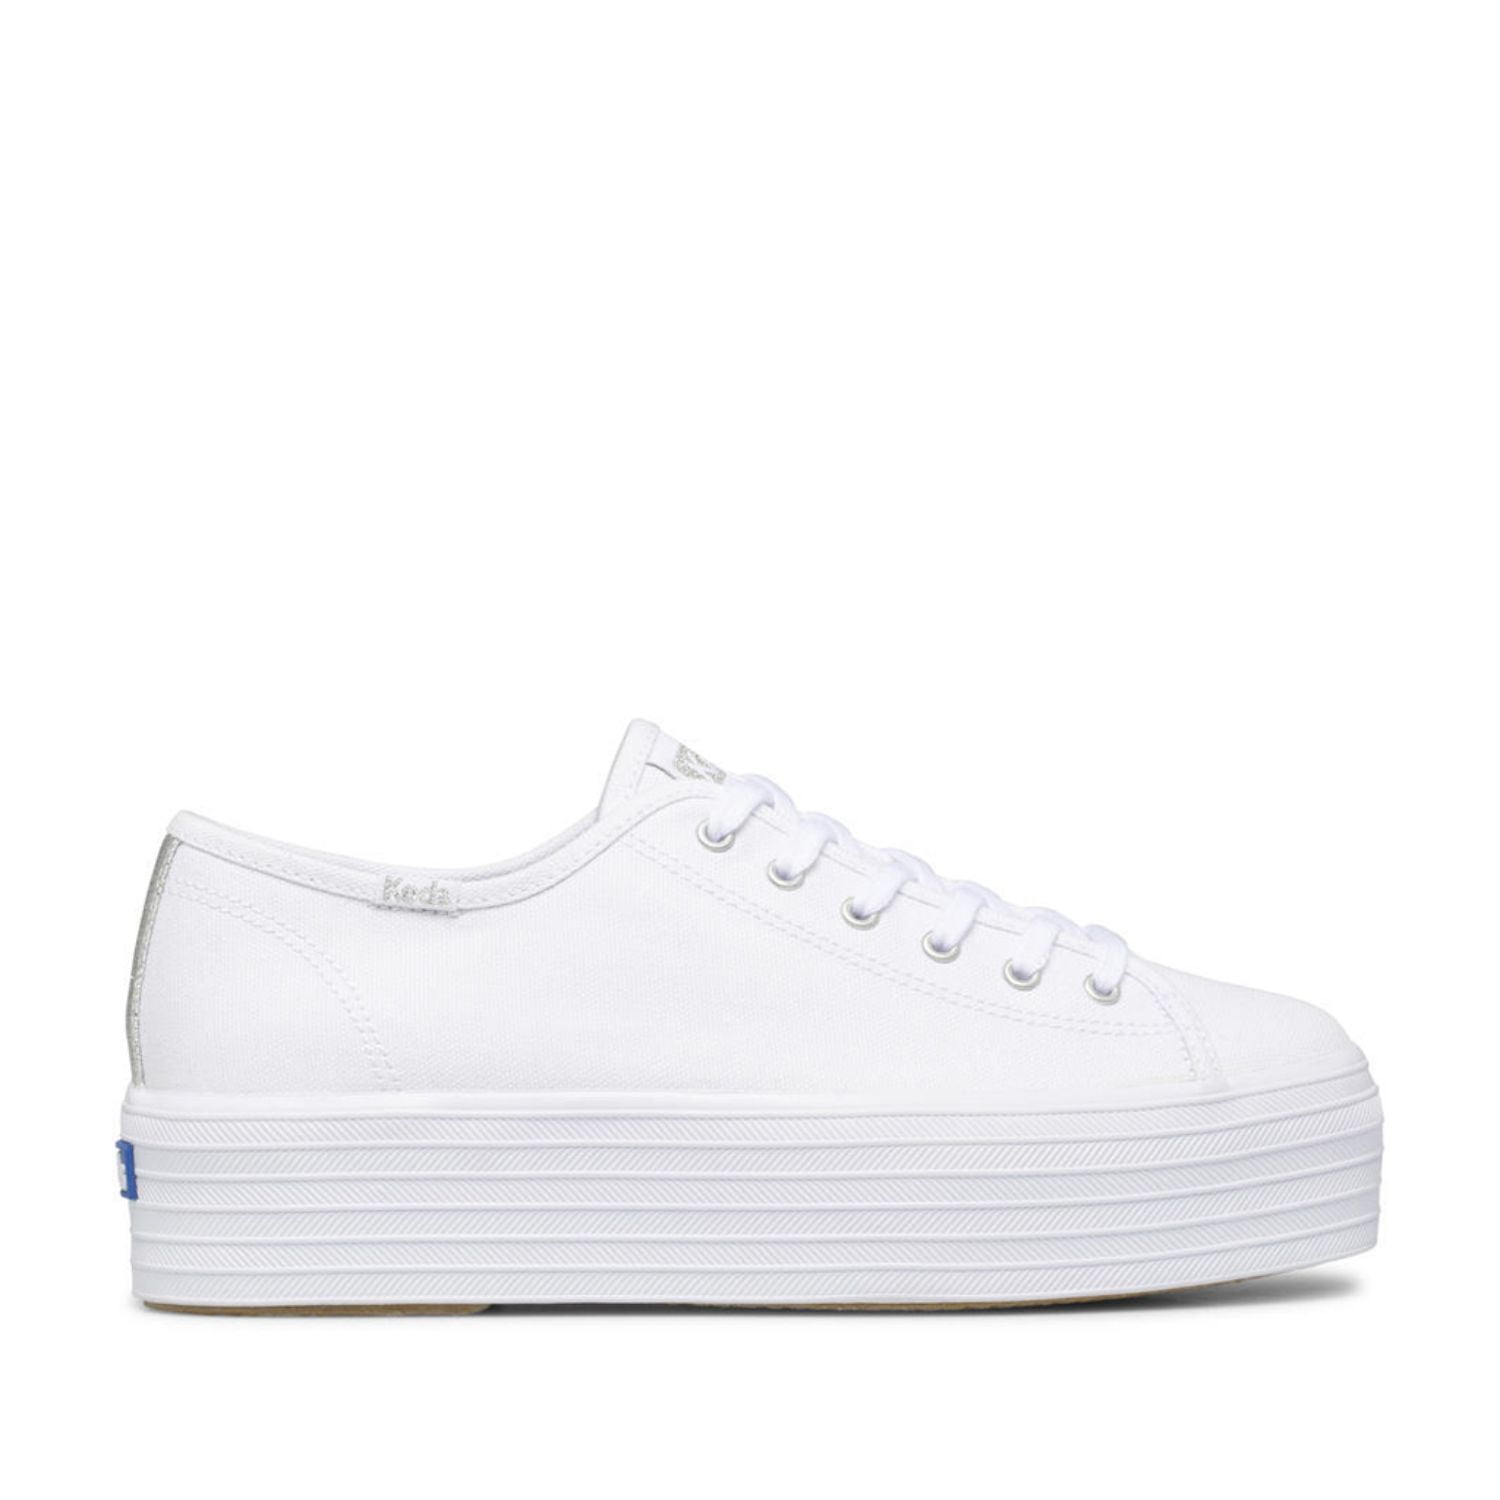 Keds Women's KICKSTART RETRO COURT LEATHER Sneaker, White/Blue, 3 UK:  Amazon.co.uk: Fashion